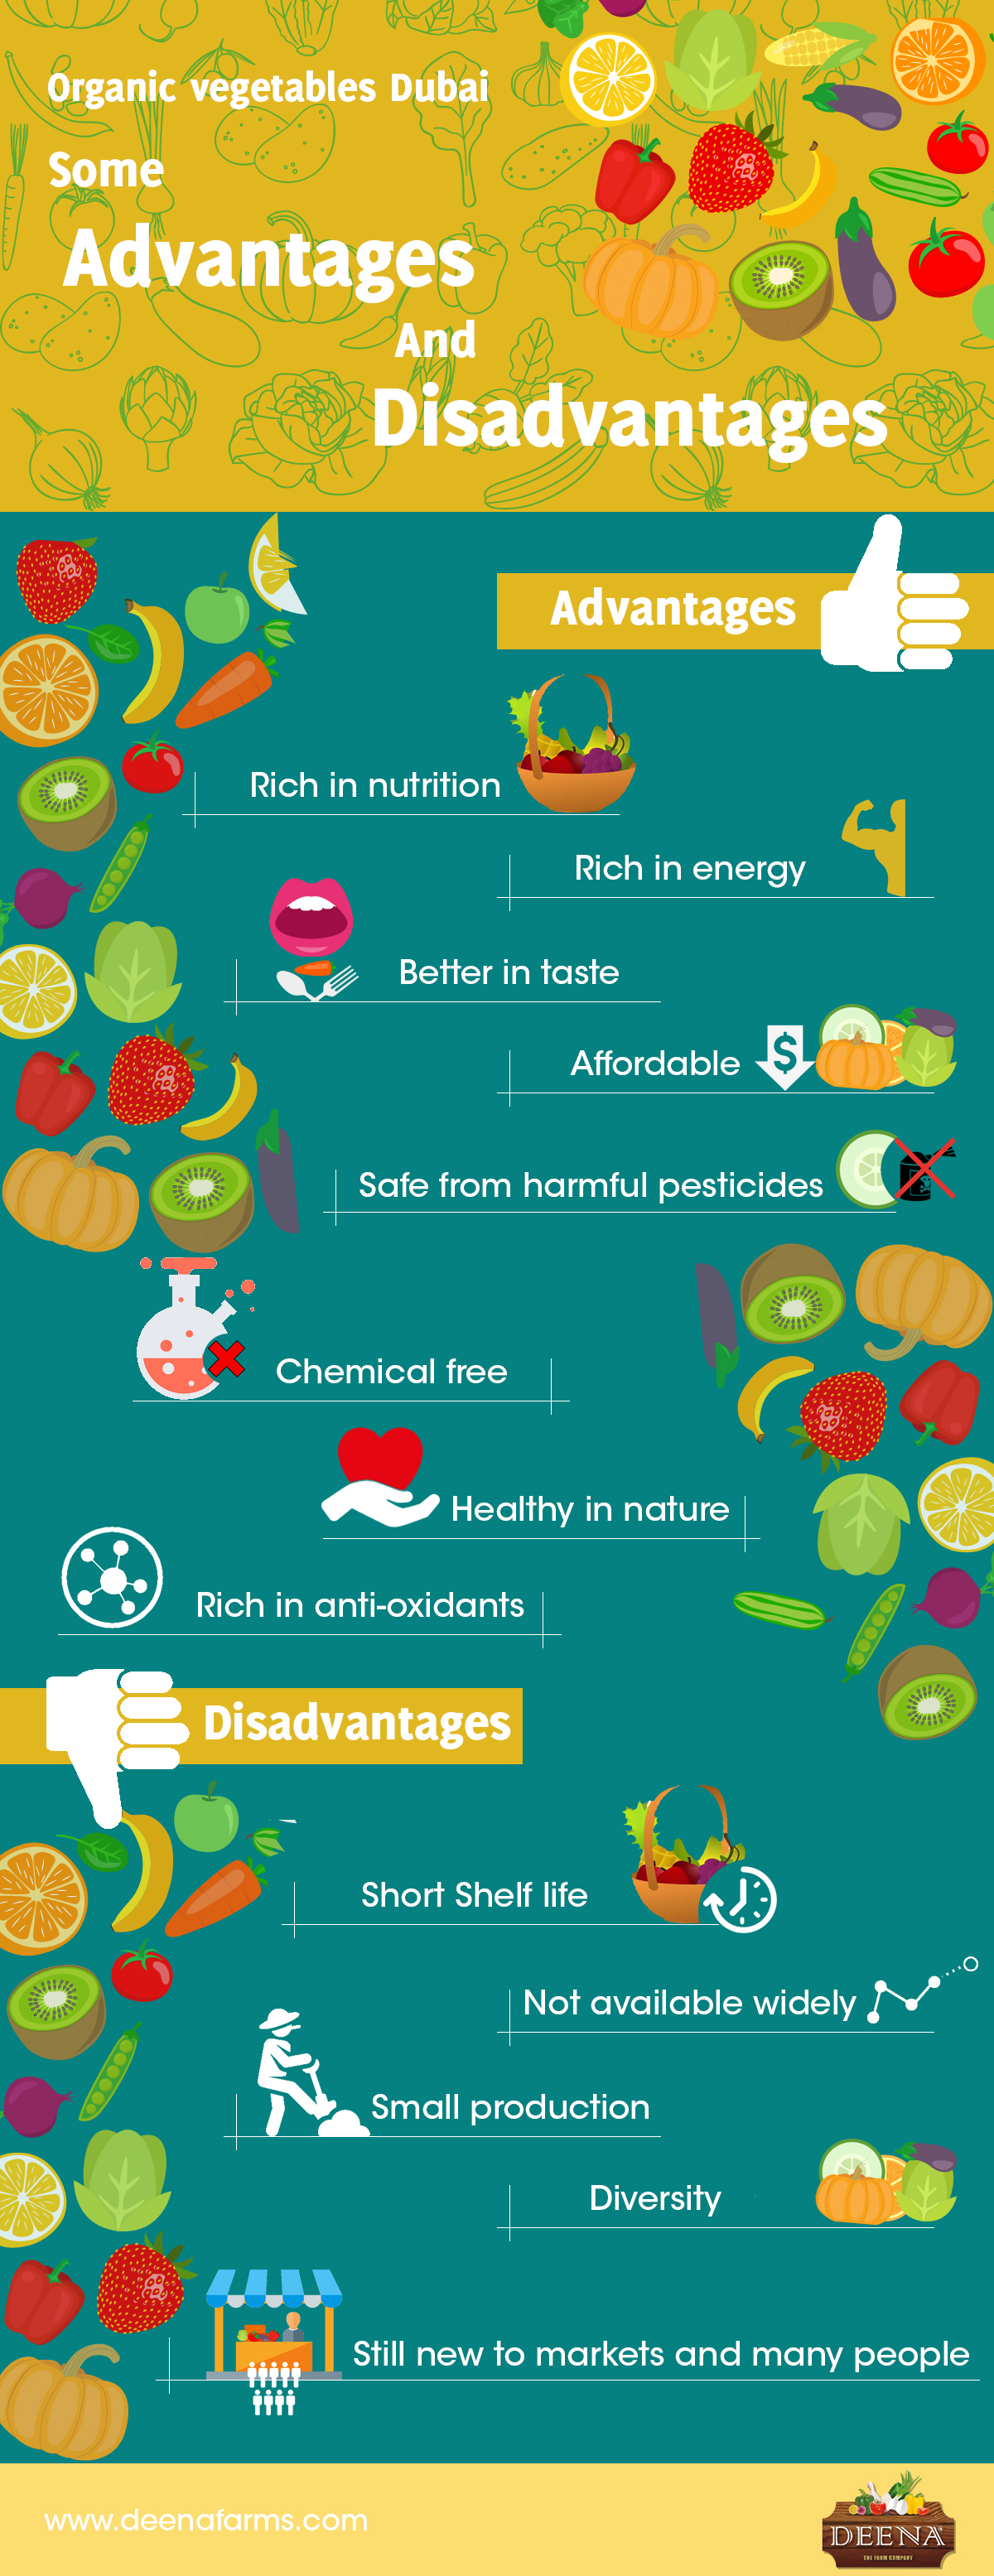 organic vegetables dubai, some advantages and disadvantages